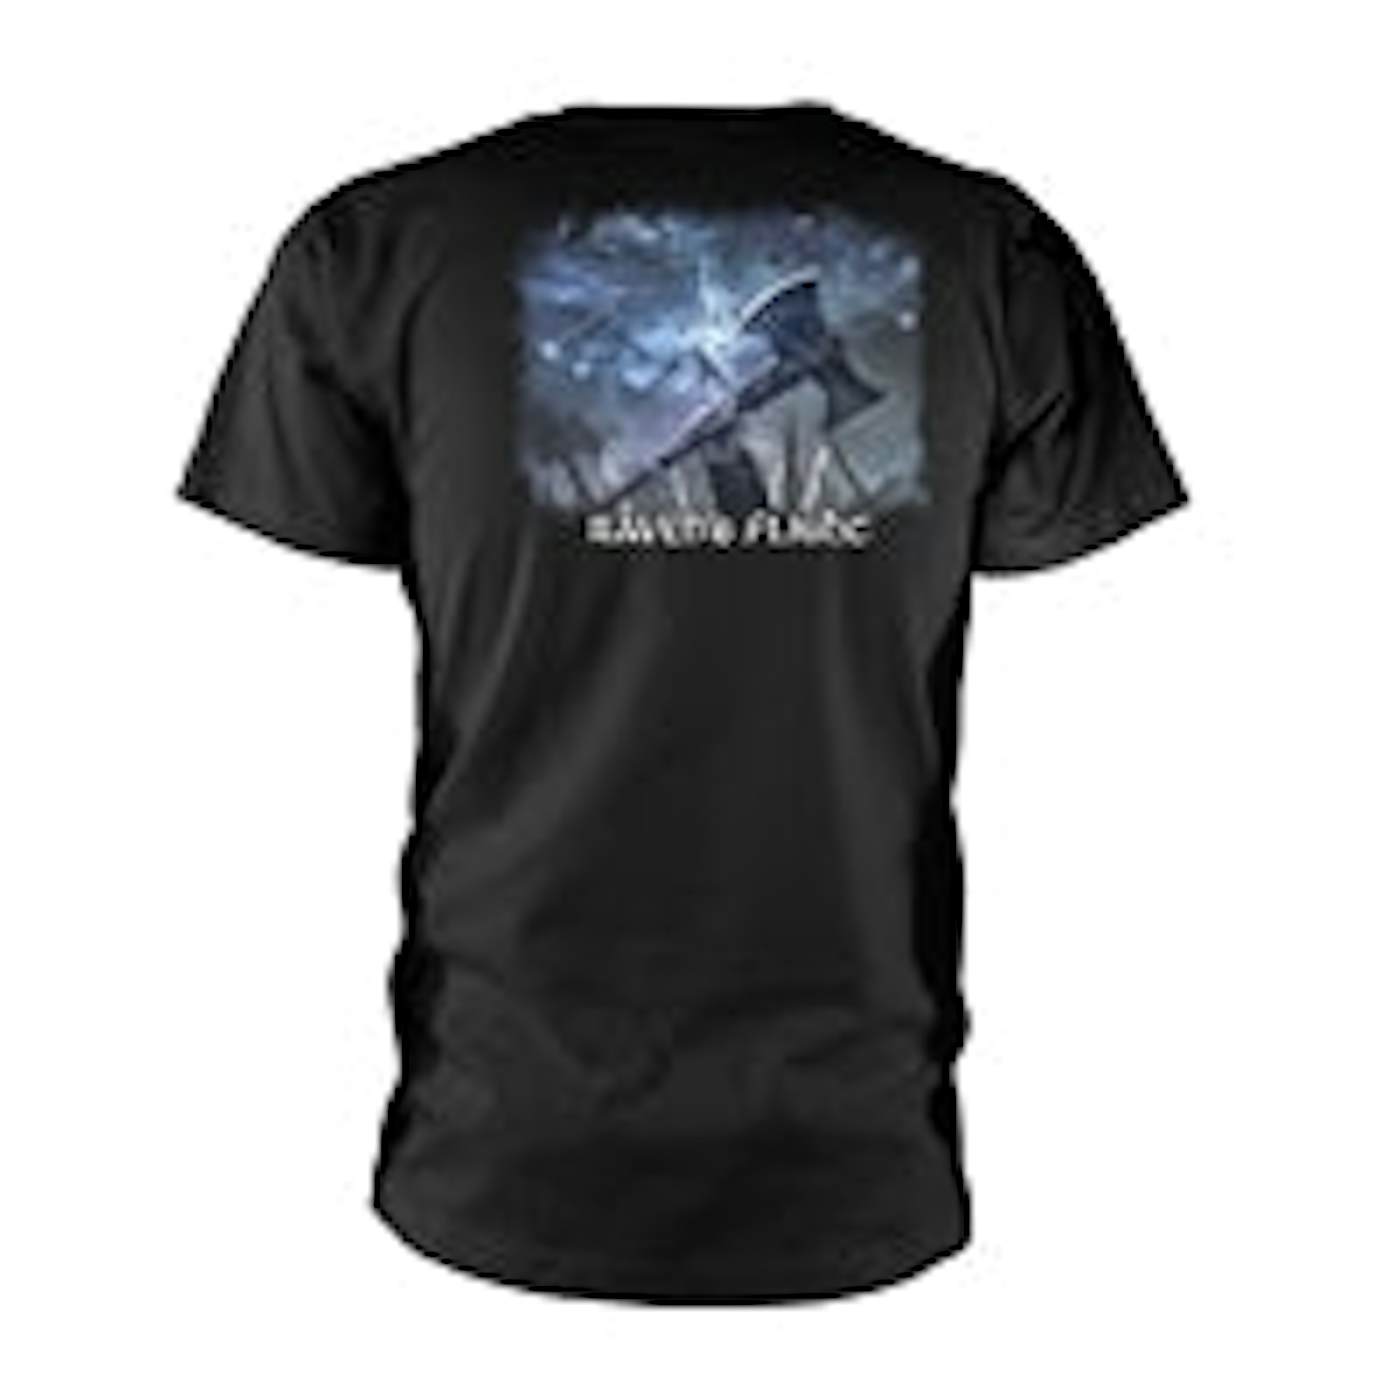 Amon Amarth T Shirt - Raven's Flight (Black)